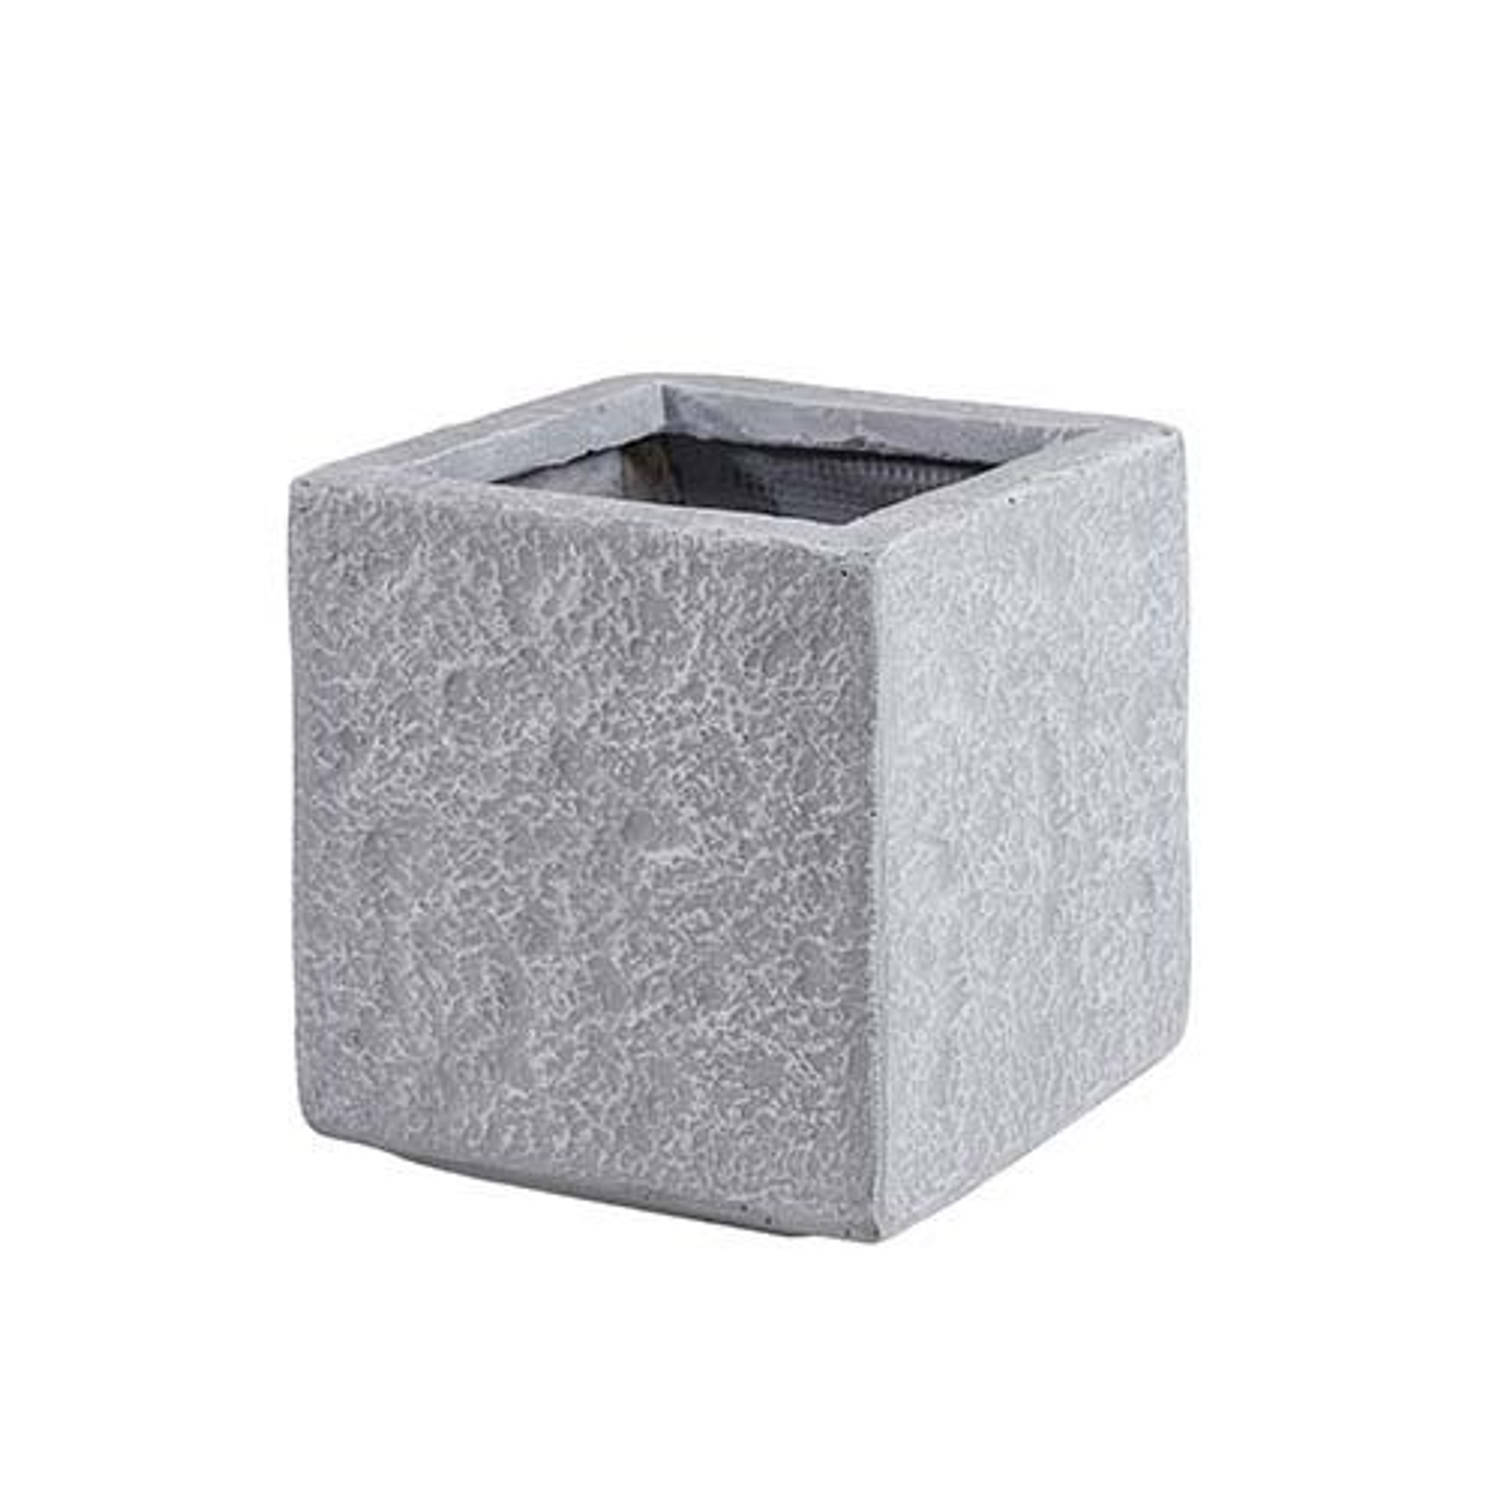 E'lite - Bloempot reykjavik vierkant cement 50x50 cm